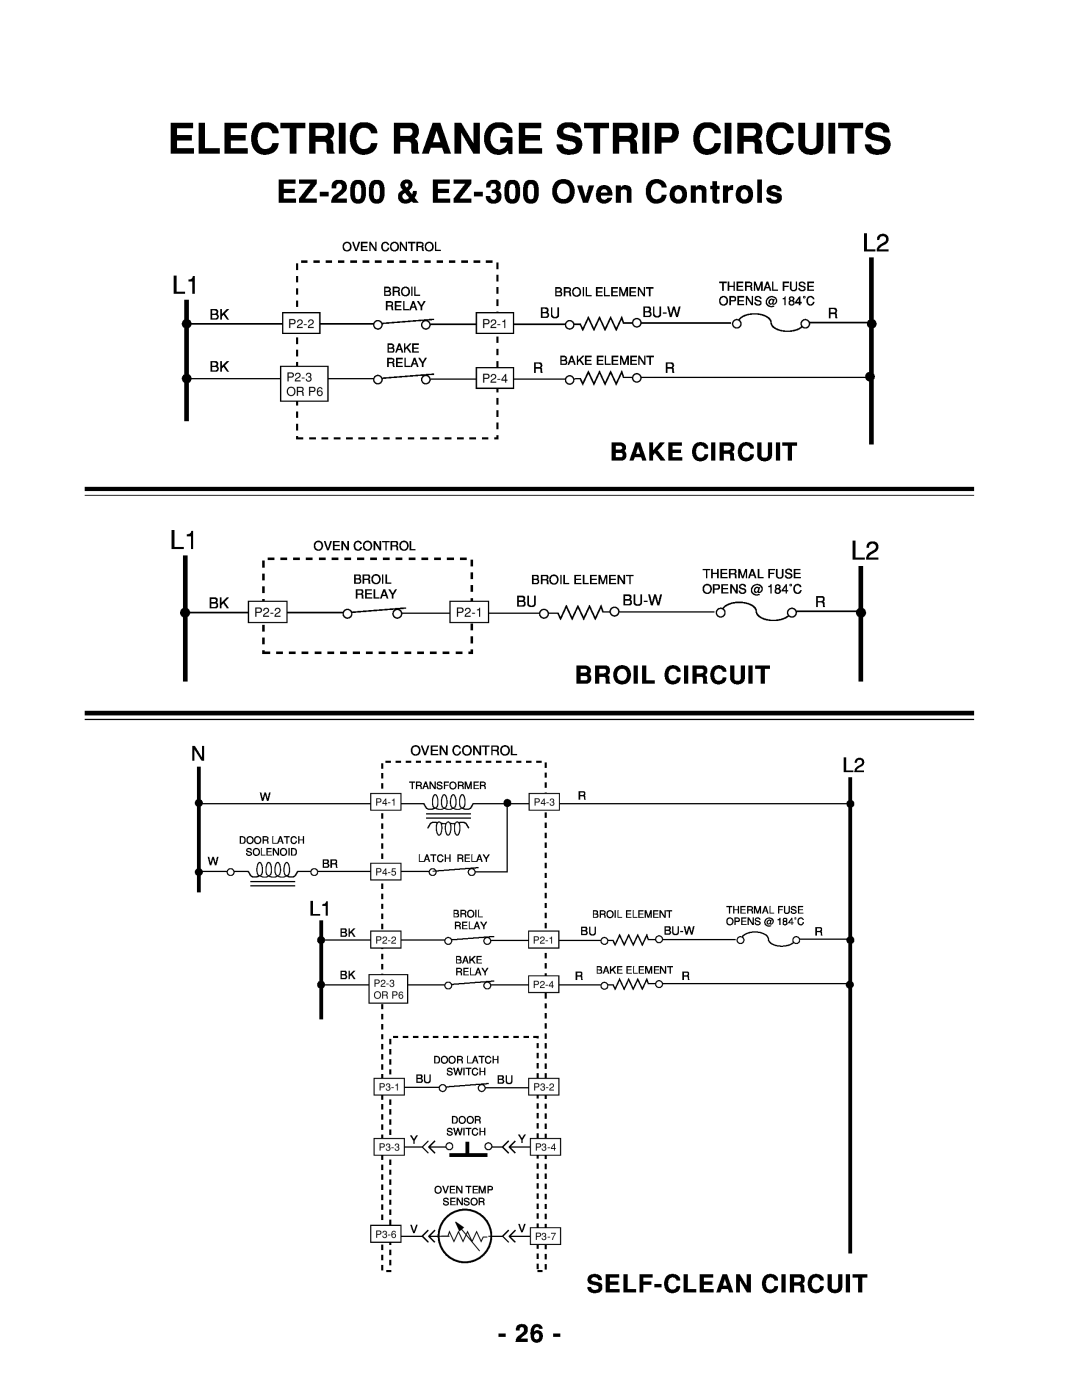 Whirlpool 465 manual Electric Range Strip Circuits, EZ-200 & EZ-300 Oven Controls 